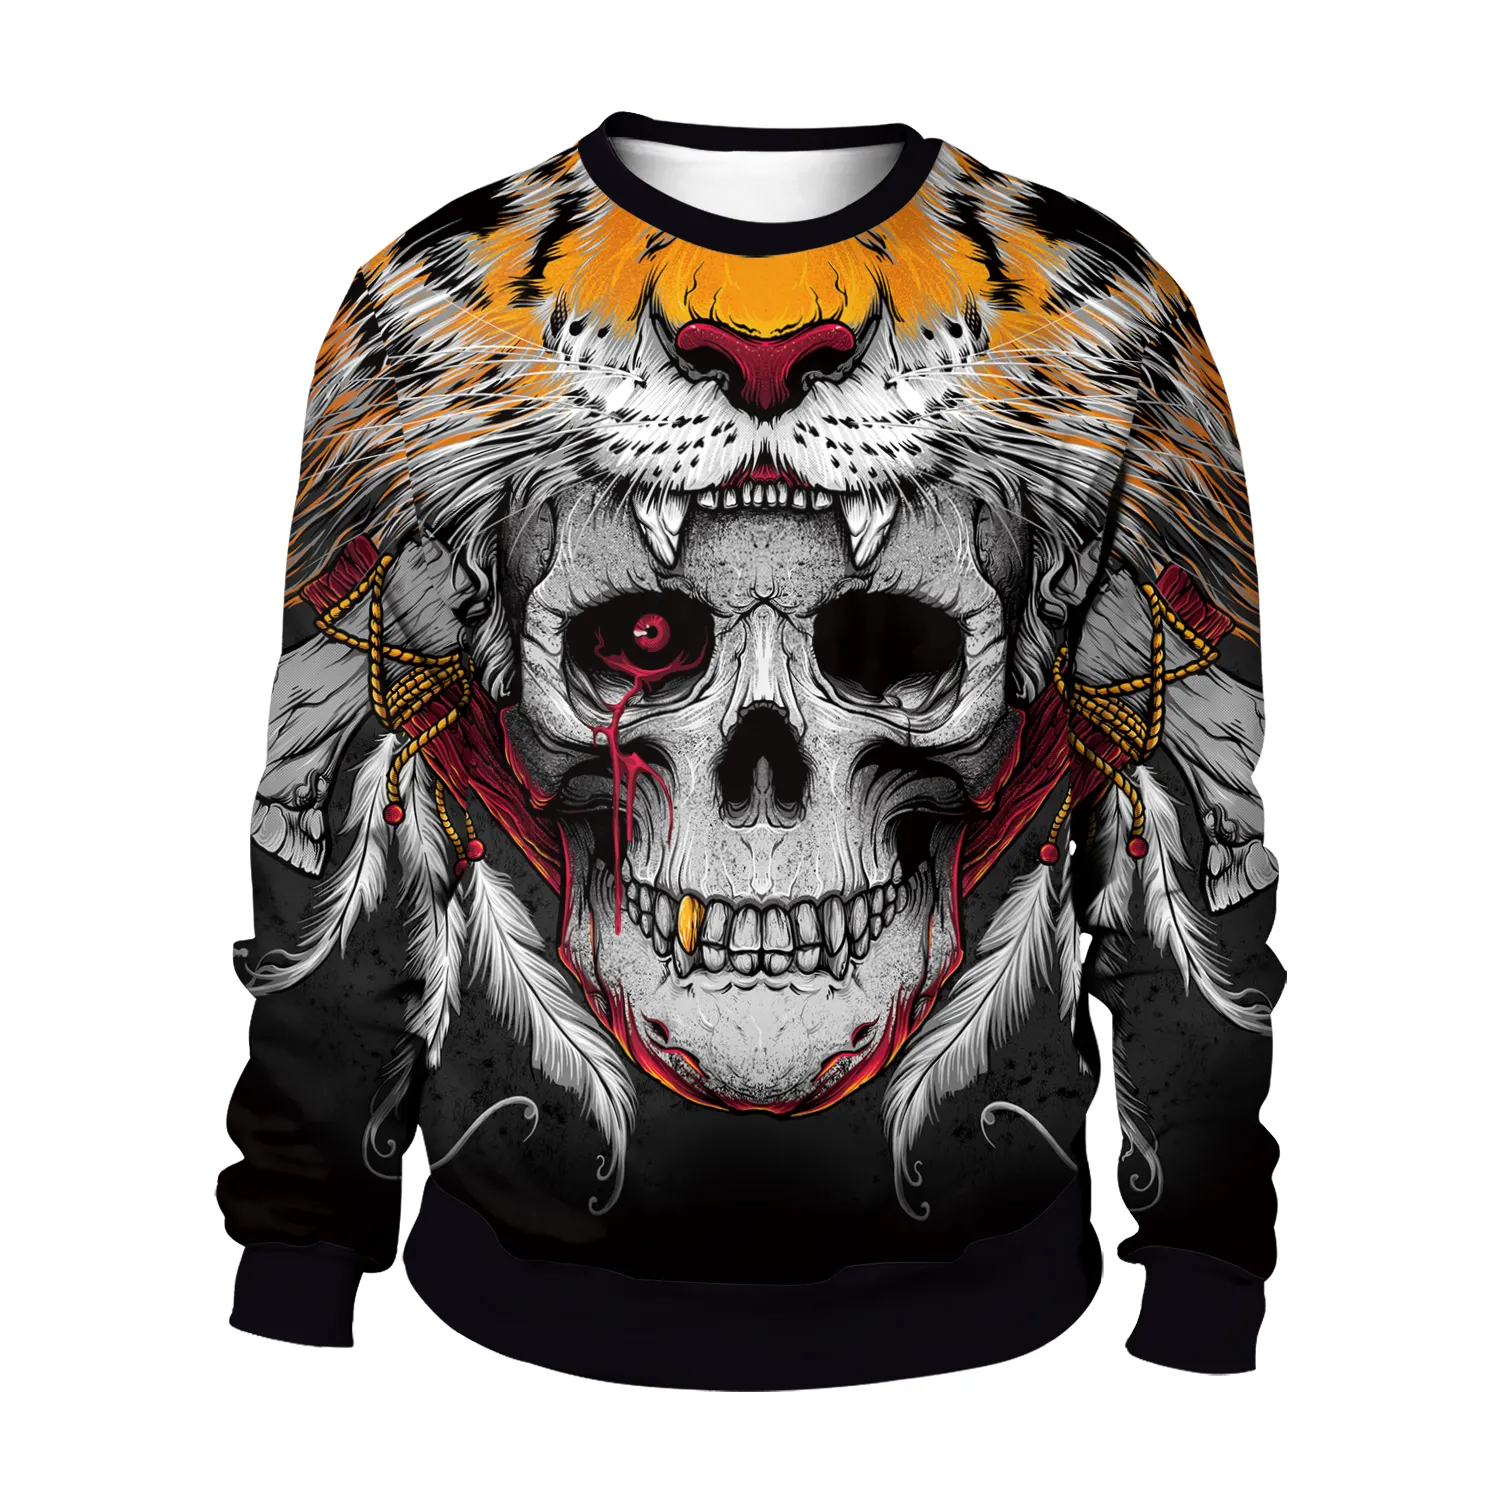 NADANBAO Brand happy halloween sweatshirt new horror skull printed design men couple sweatshirts O-neck cosplay hoodies